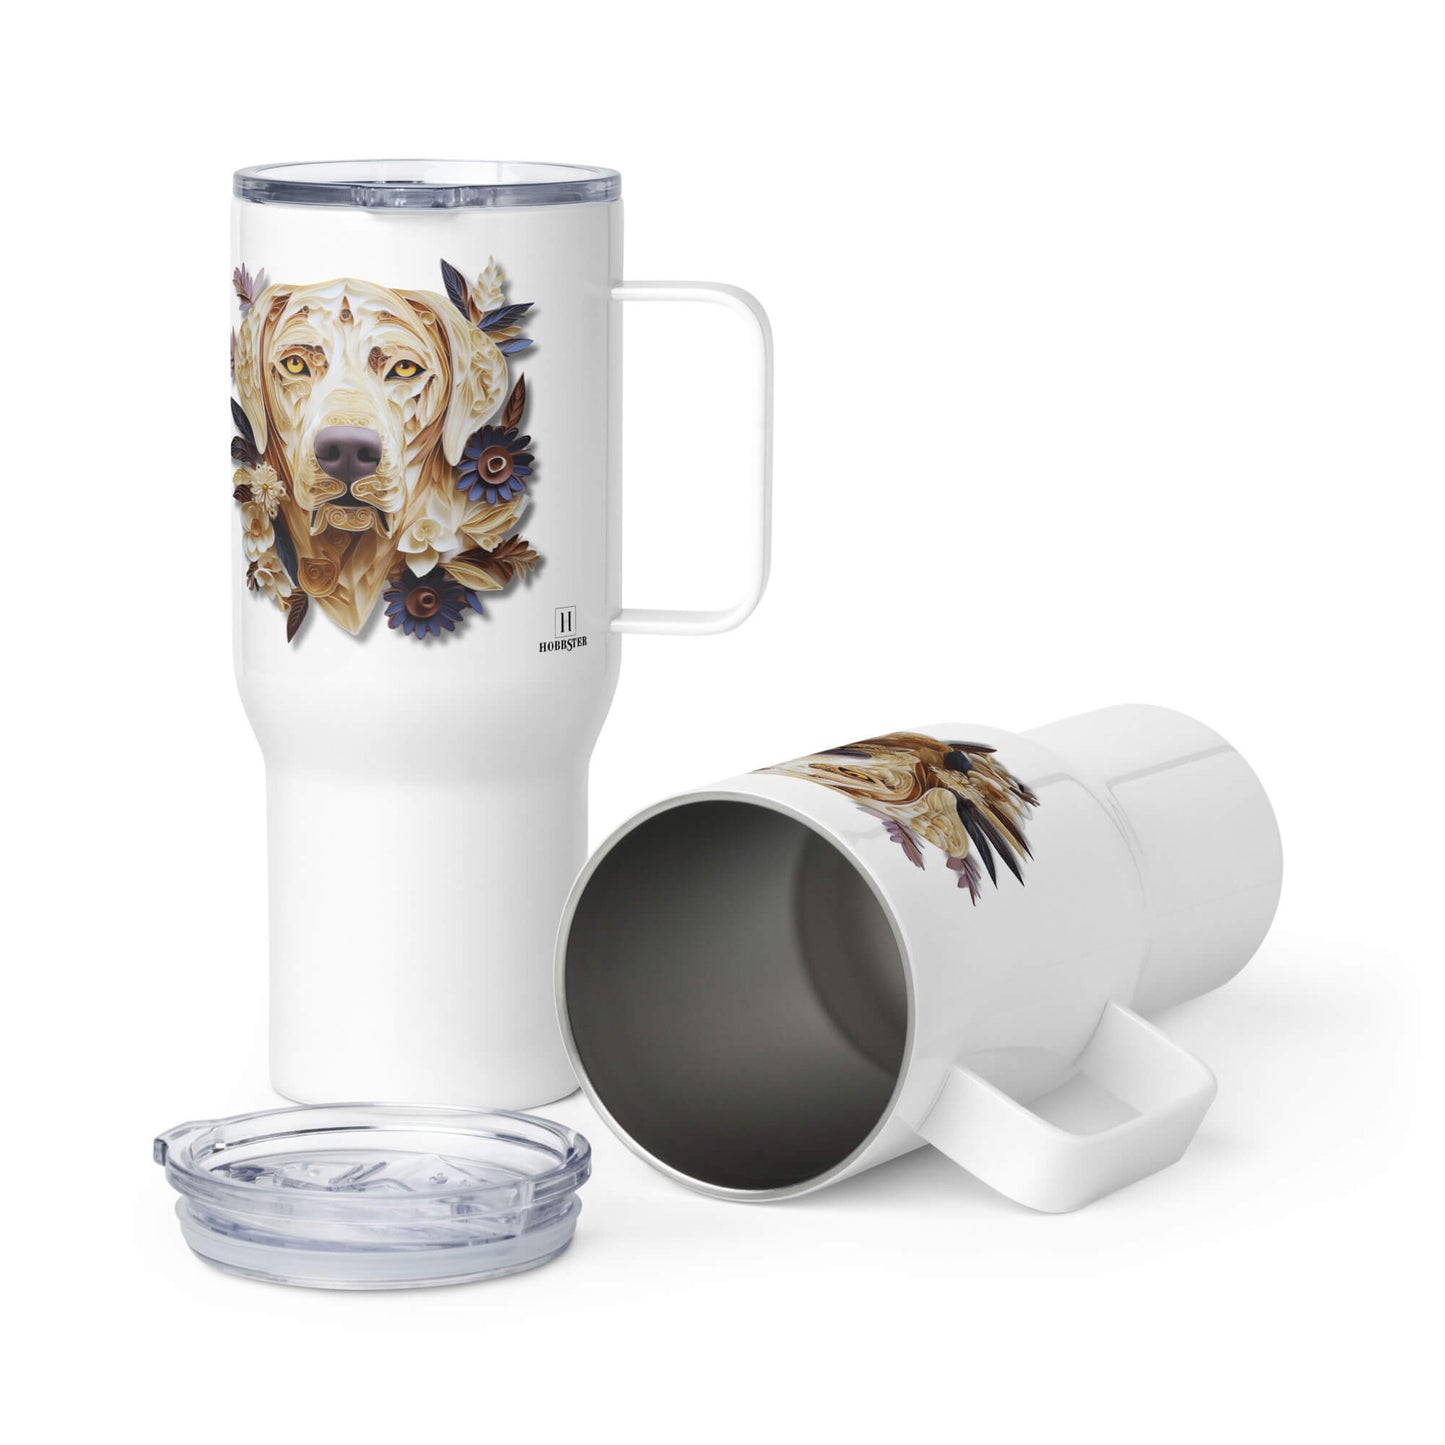 25oz Travel Mug with a Handle - Labrador Paper Quilling Design - Hobbster